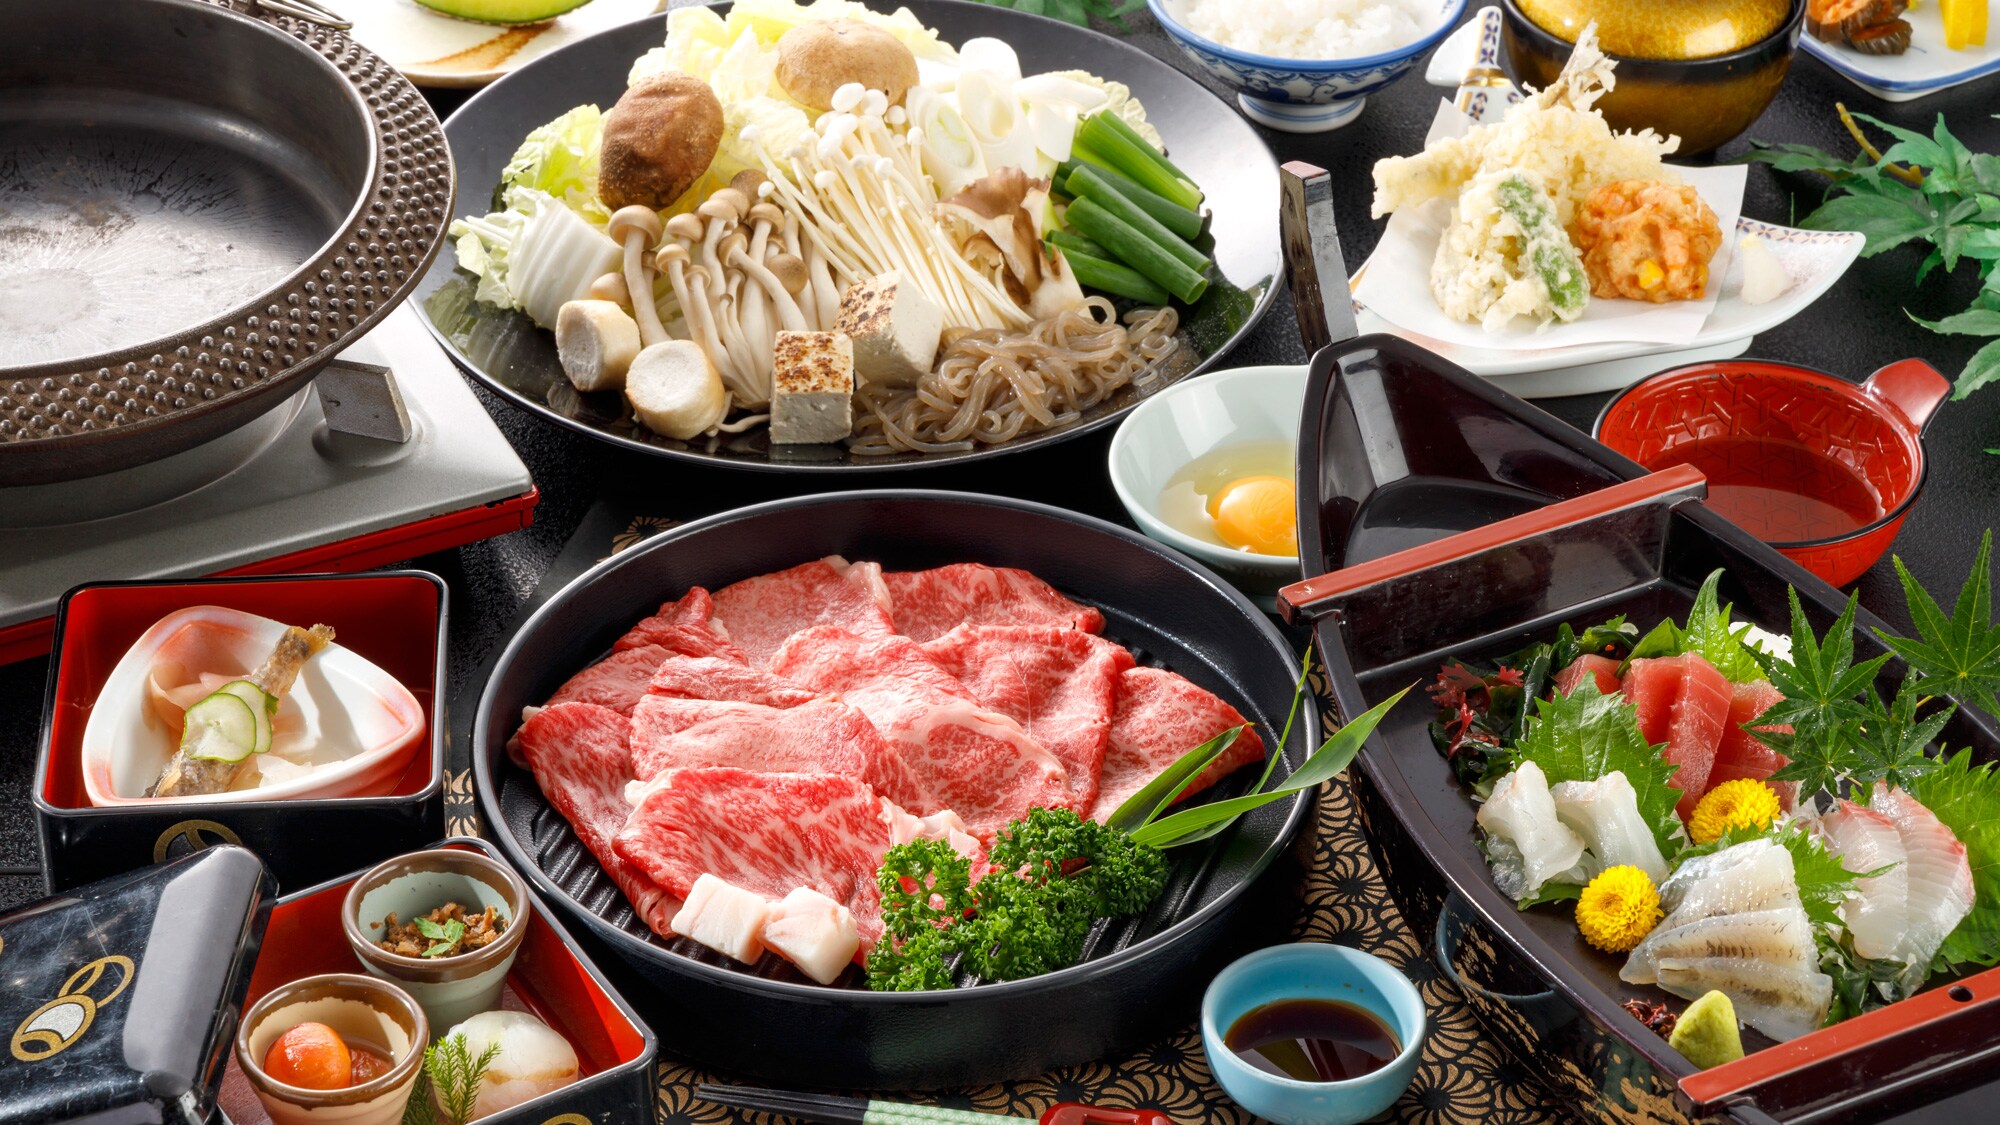 The finest Hazu Wagyu beef hot pot with sukiyaki ...!